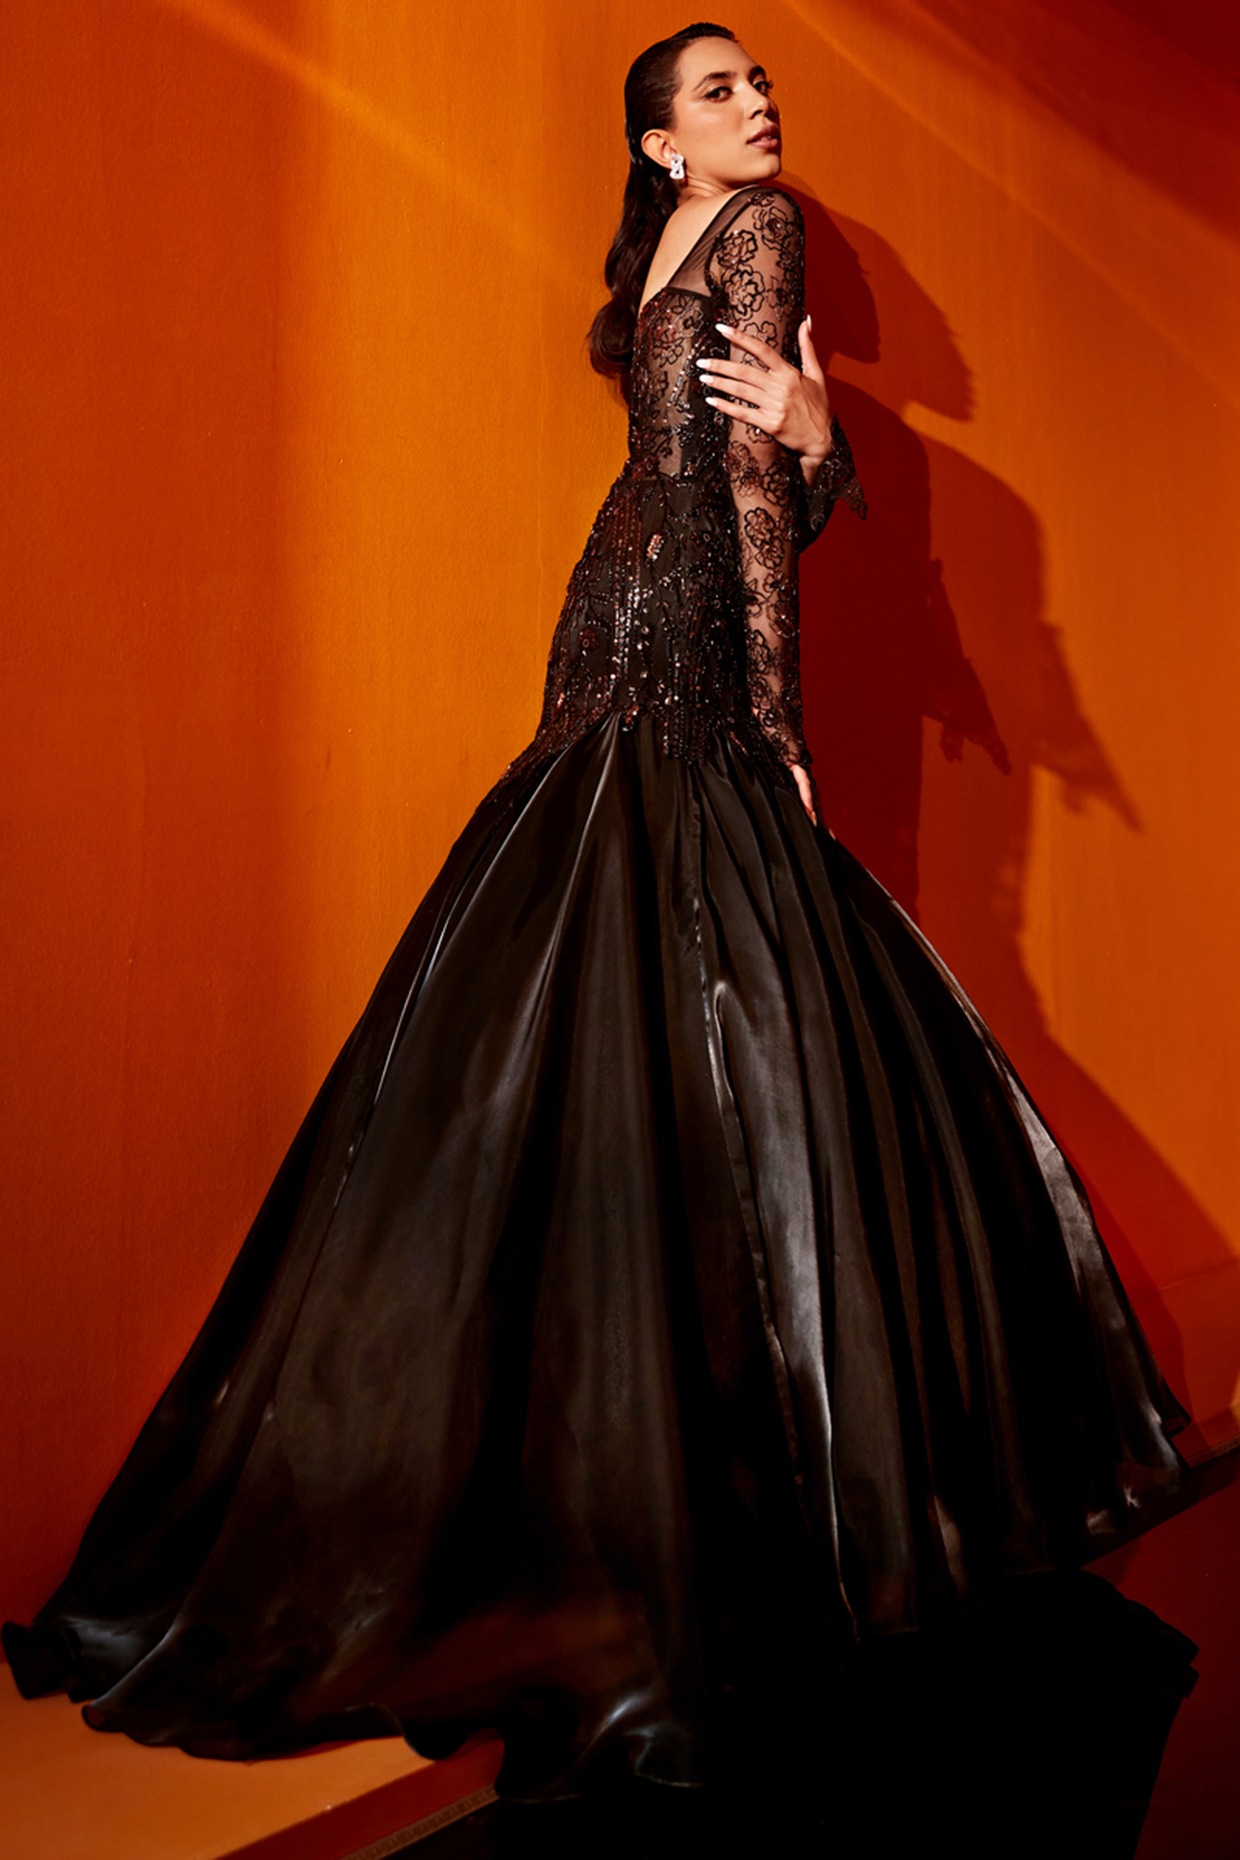 ANTIQUE Victorian Edwardian Black Net Lace Mourning Dress 2 Pc Dress | eBay